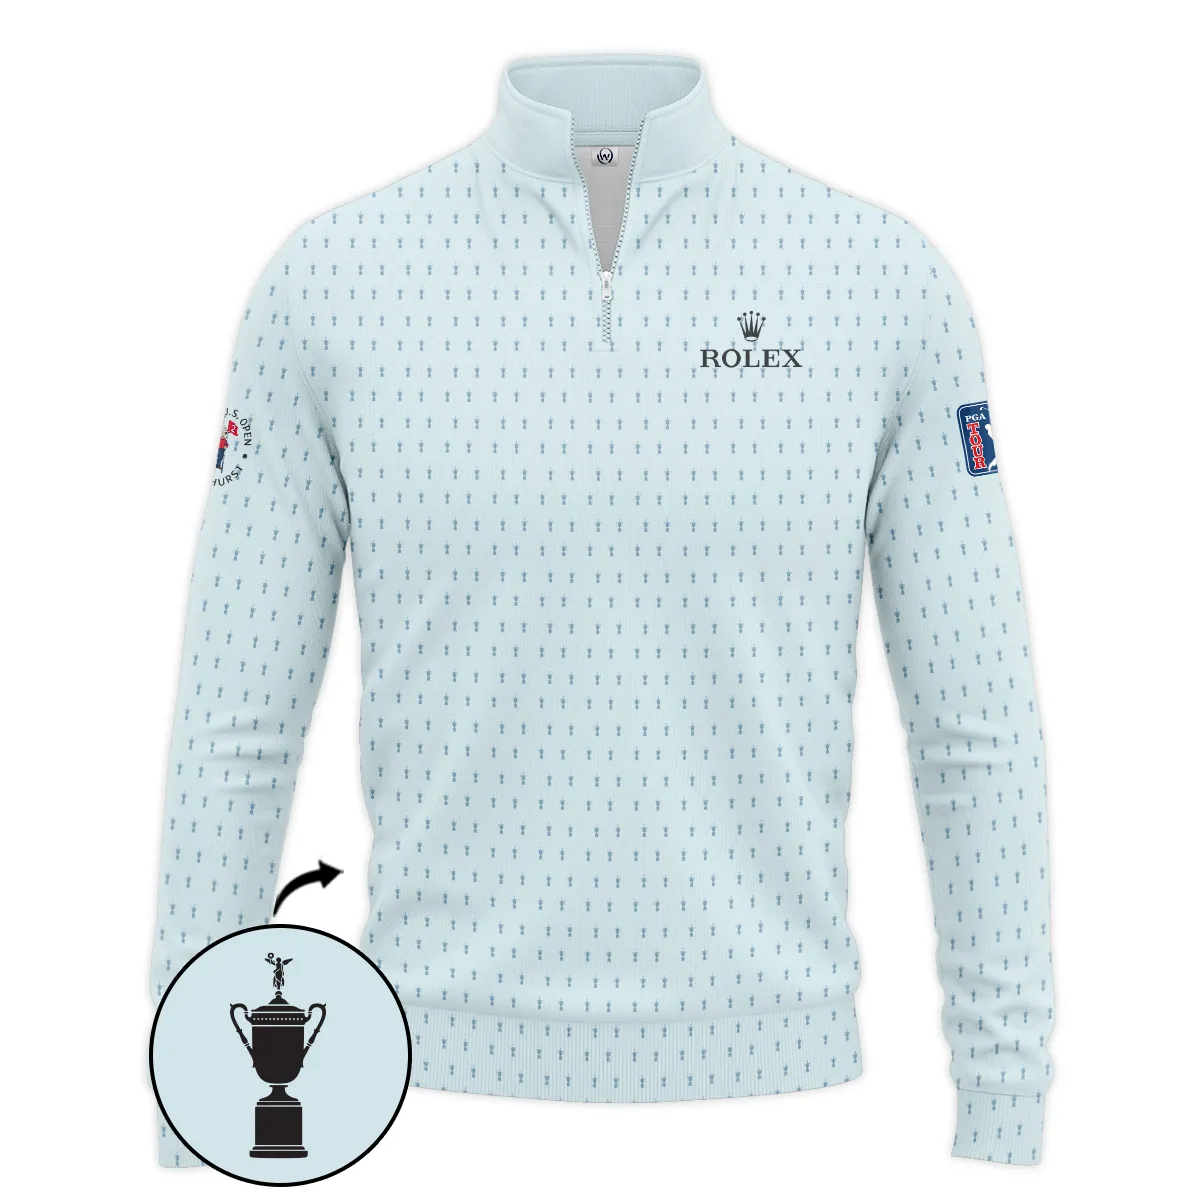 Golf Pattern Cup Light Blue Mix Green 124th U.S. Open Pinehurst Pinehurst Rolex Performance T-Shirt Style Classic